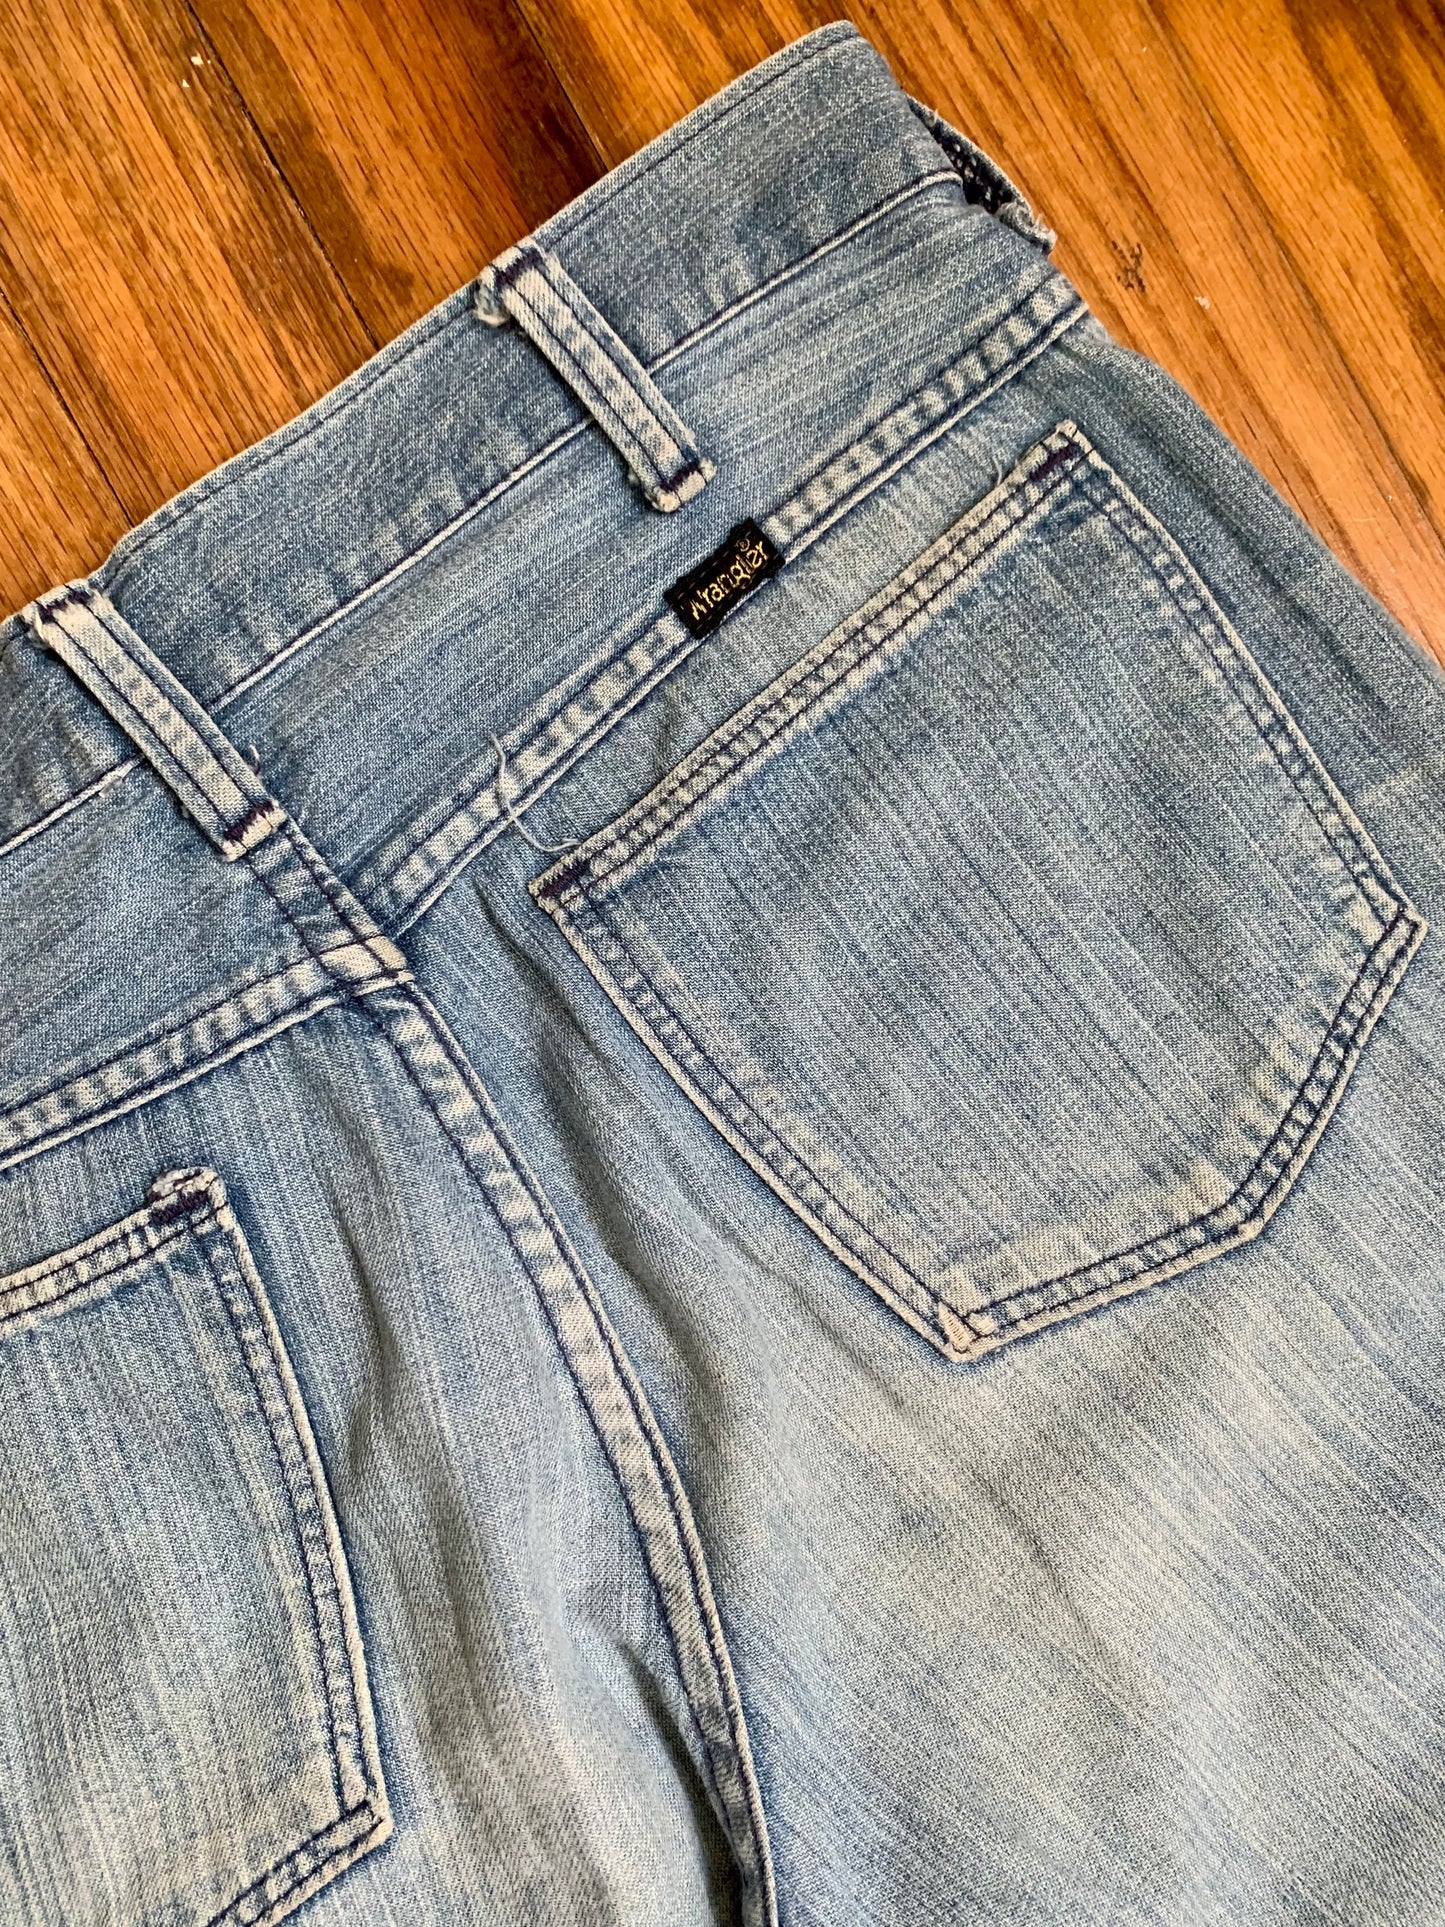 Soft Worn Vintage Wrangler Jeans 30x29 (women's 6/8)